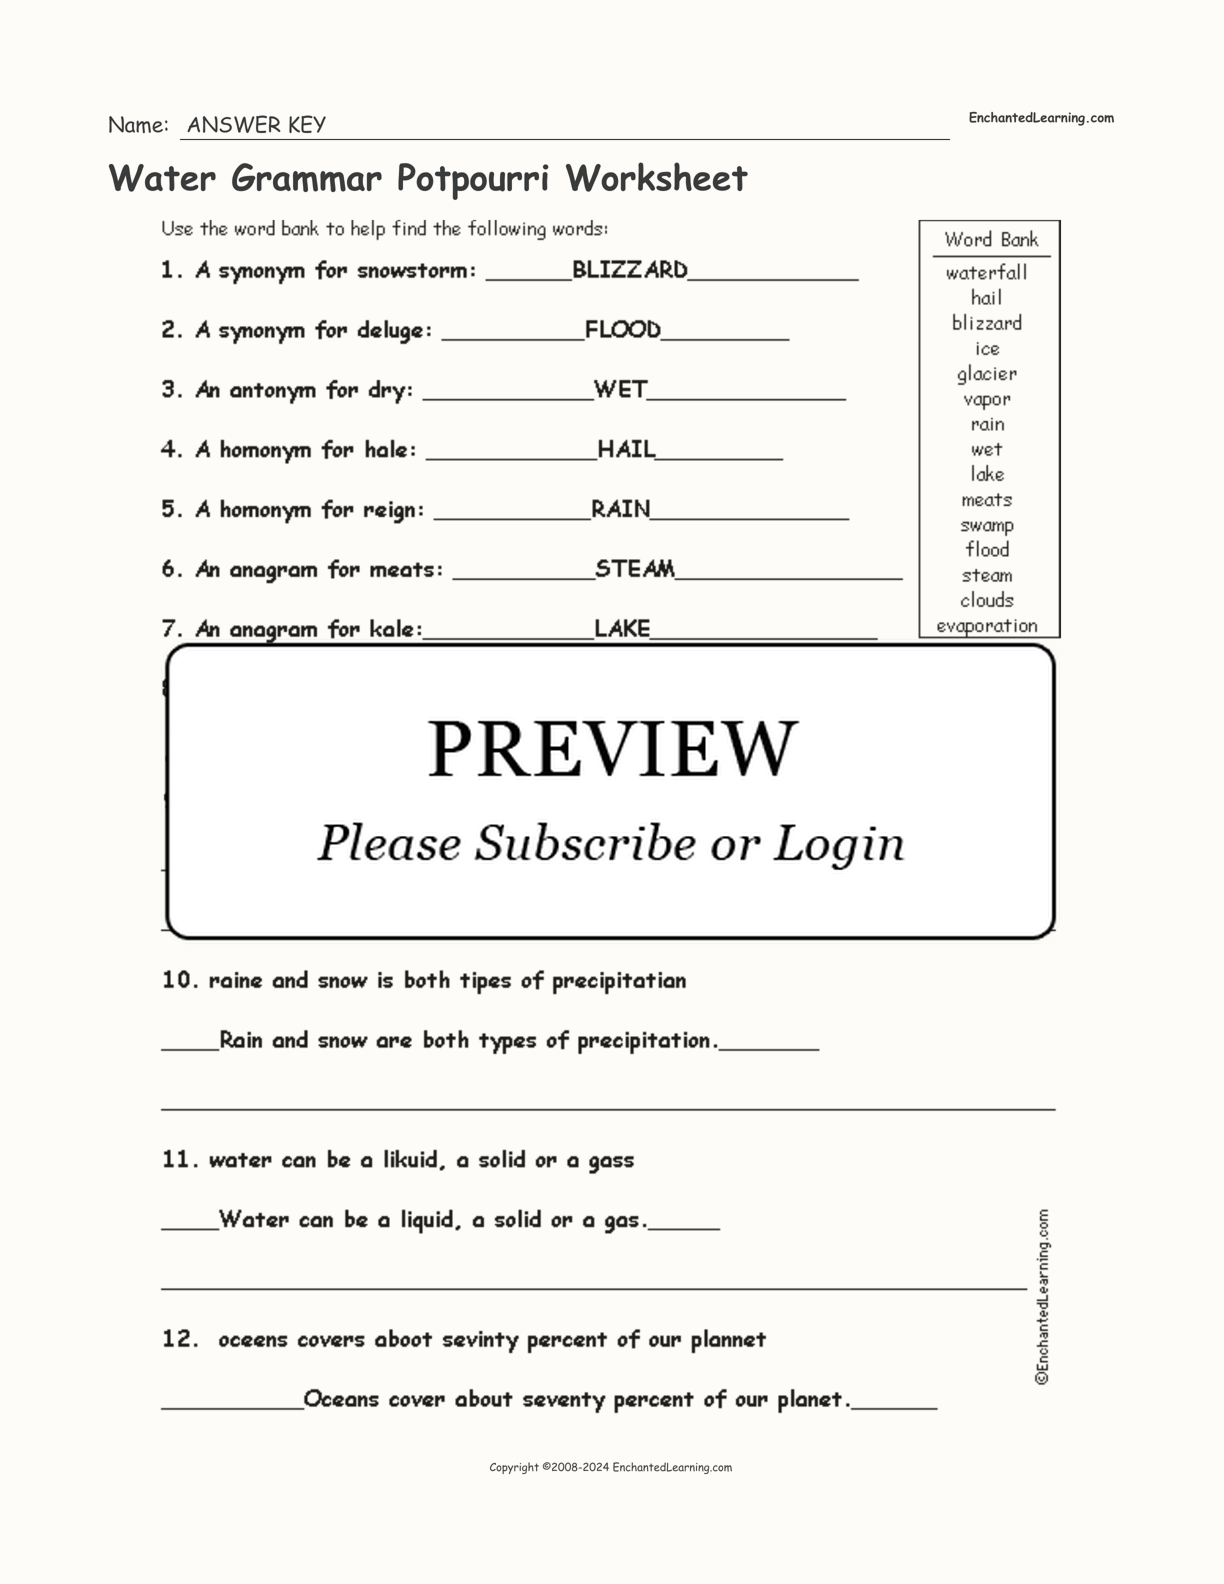 Water Grammar Potpourri Worksheet interactive worksheet page 2